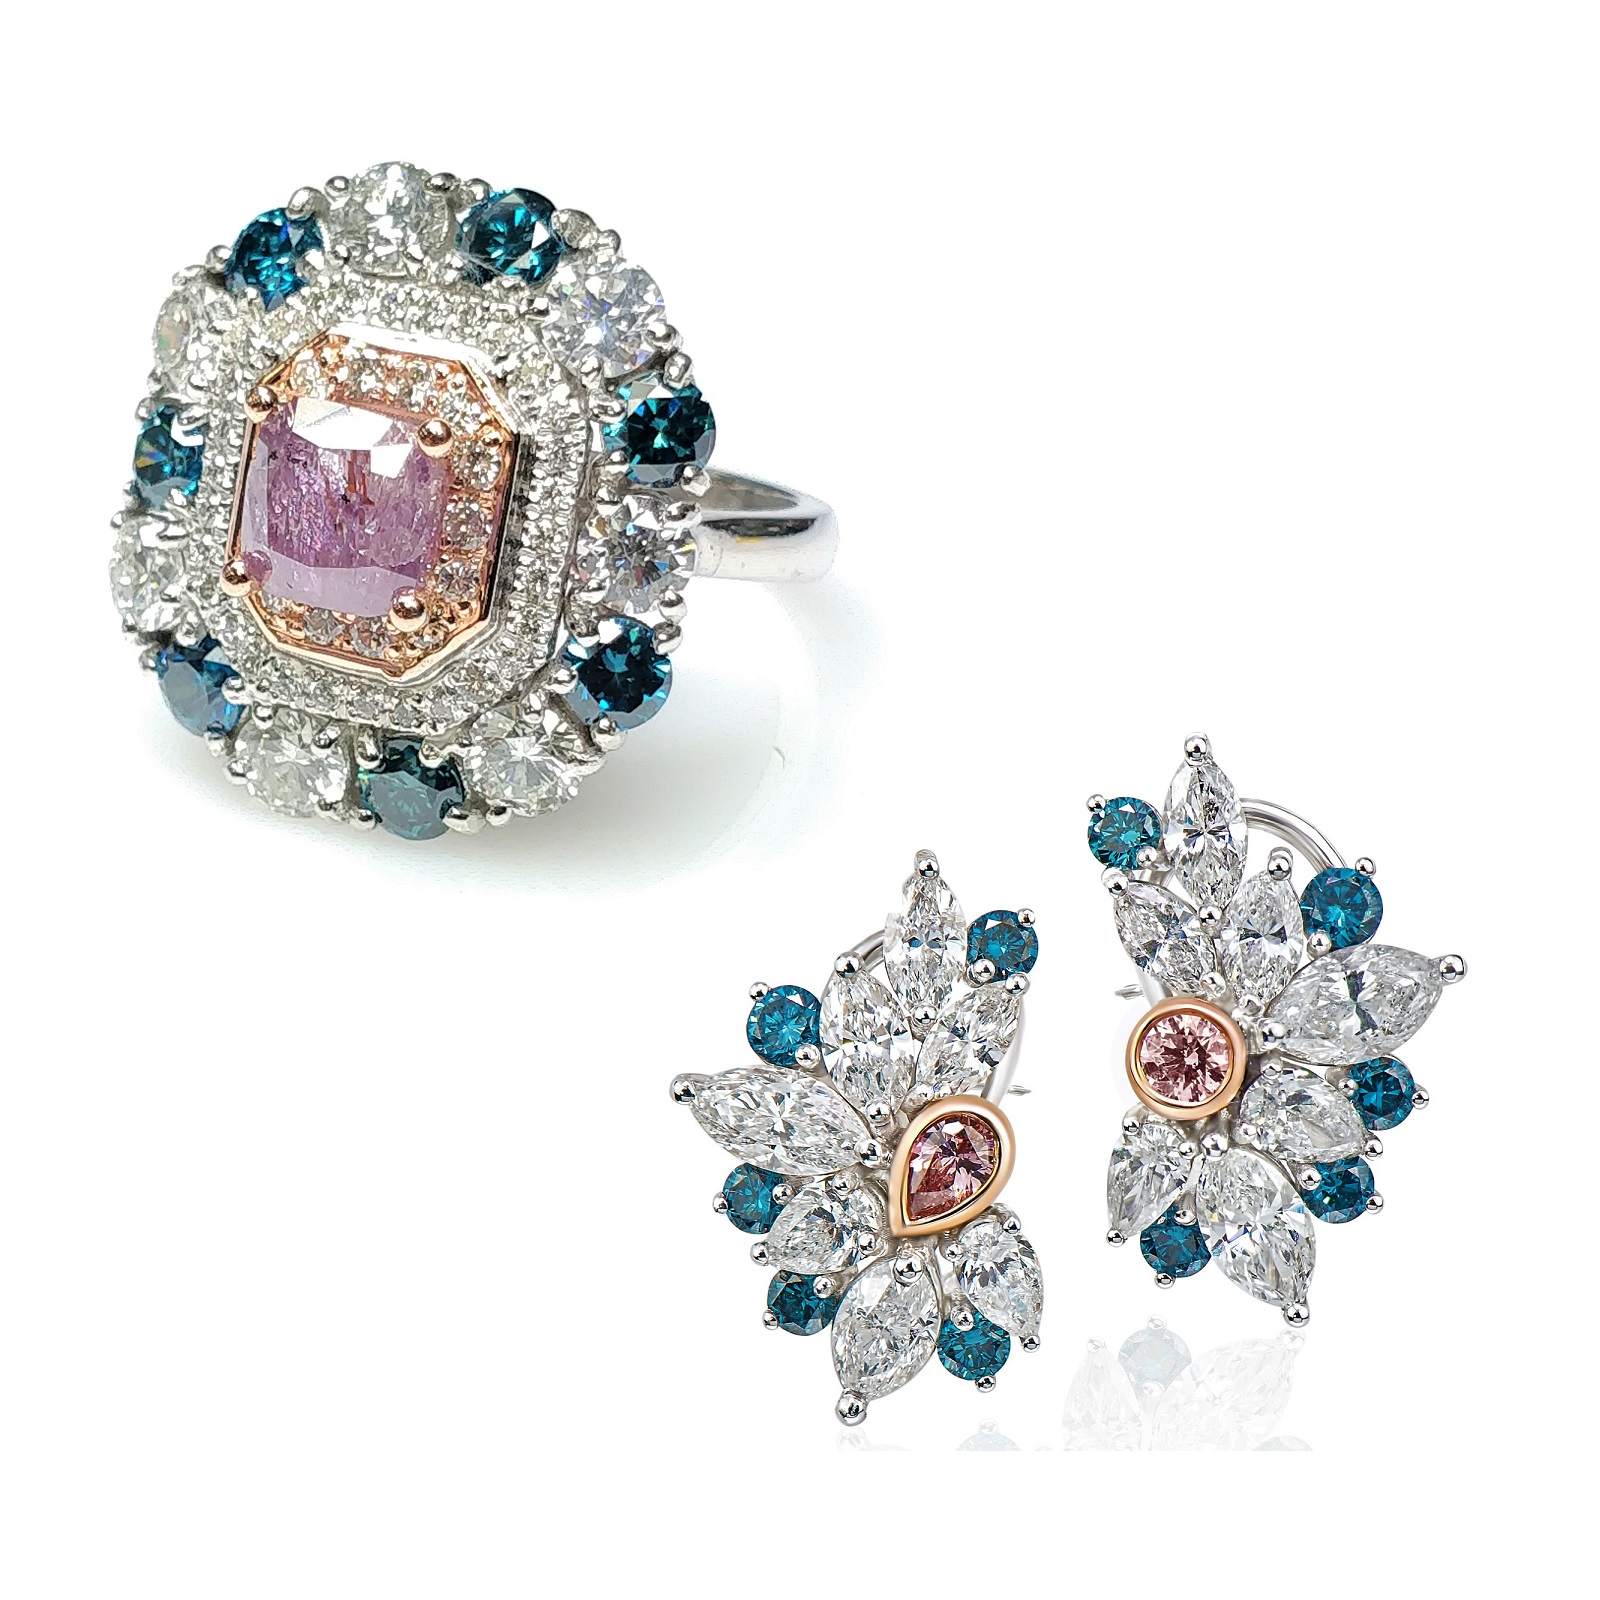 Fancy Pink-Purple Diamond Ring & Argyle Pink Diamond Earrings Set (12.63ct TW)